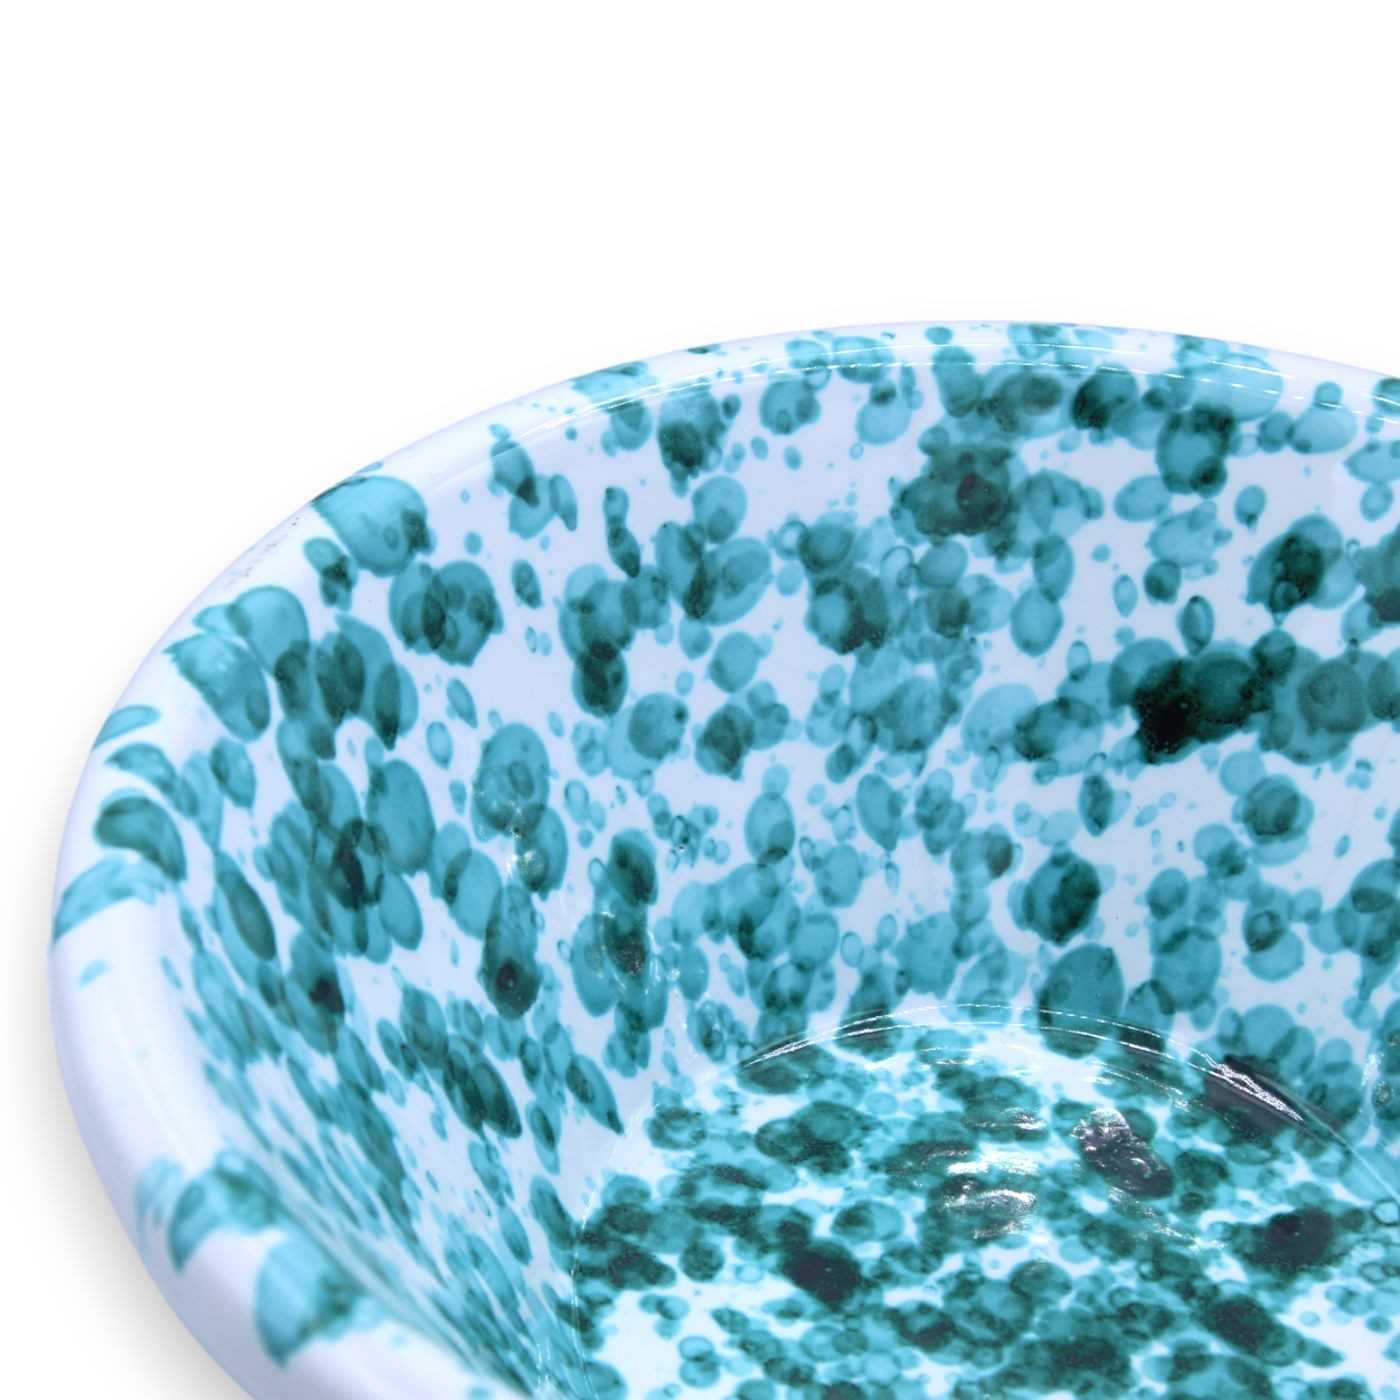 Lemmi, Sicilian ceramic bowls with verdigris mottled decoration with 10  size options (1 pc) SELECTED COLORING OPTION 1st measure: Ø 7.5 cm